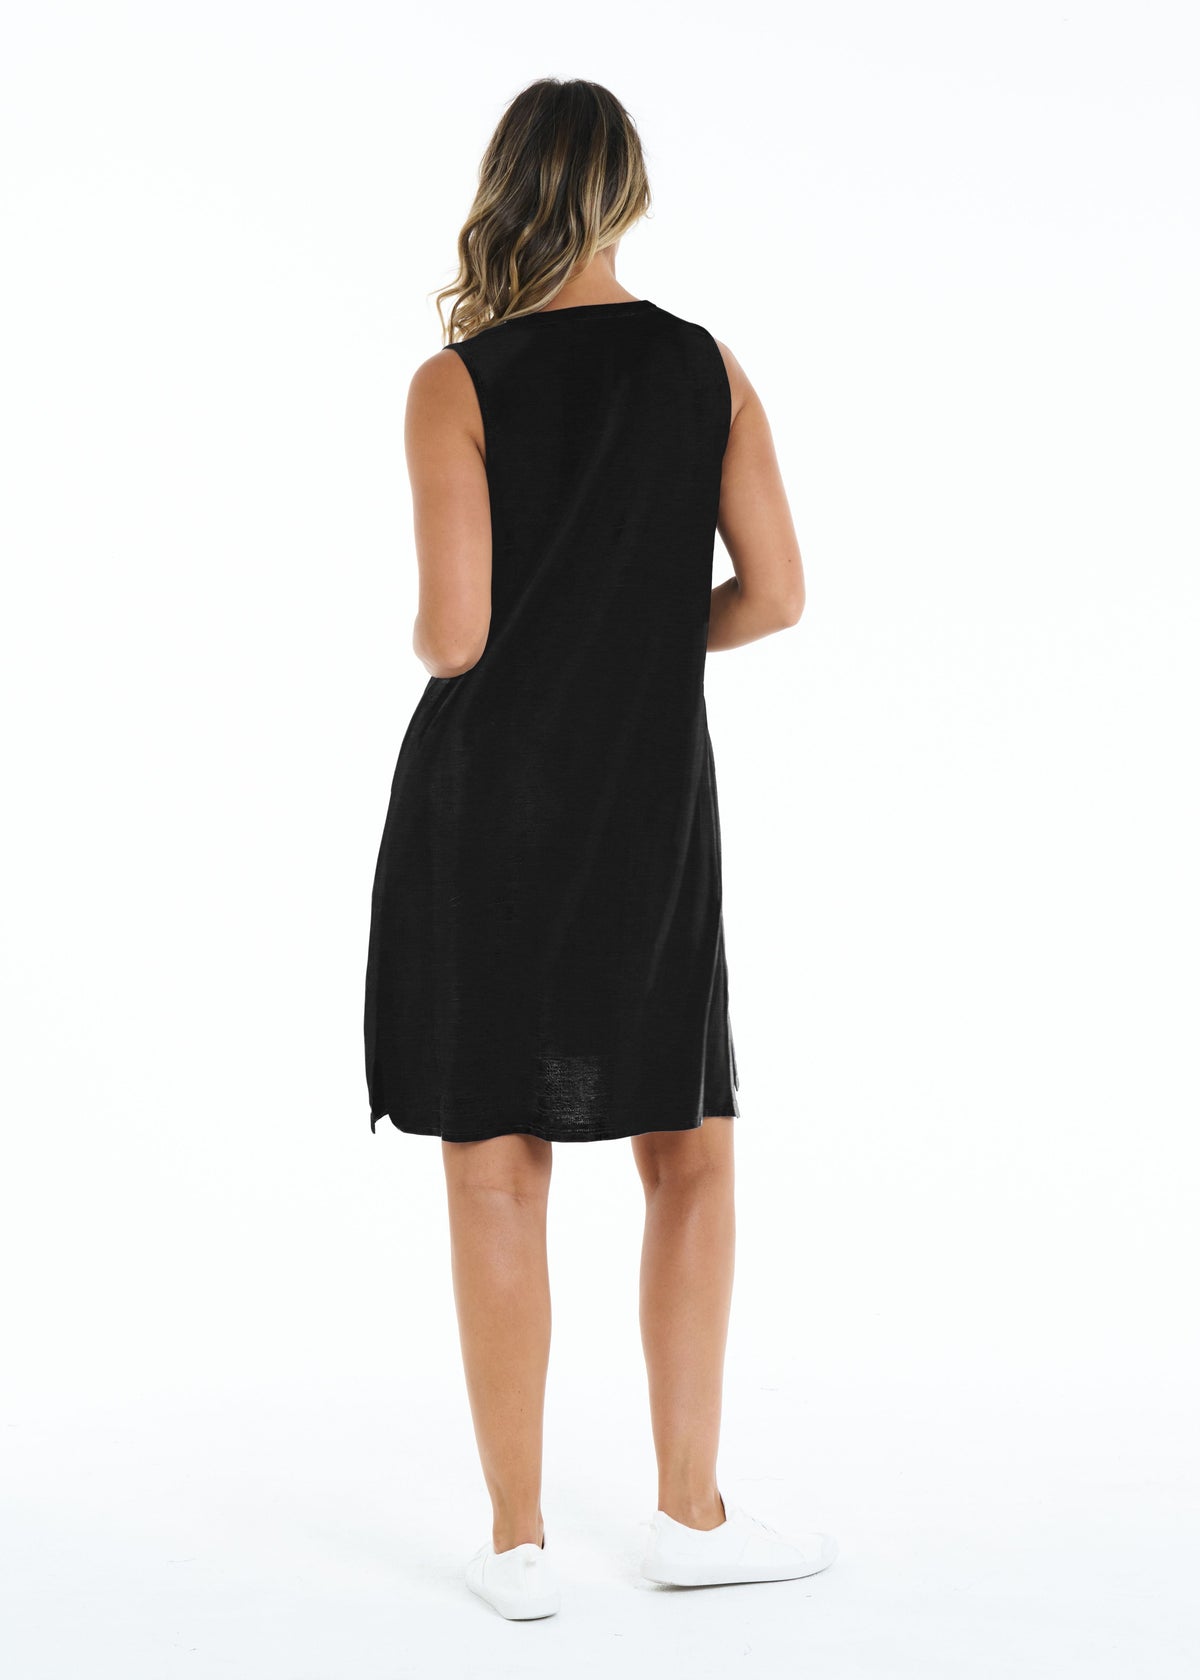 Summer Dress - Black - Betty Basics - FUDGE Gifts Home Lifestyle